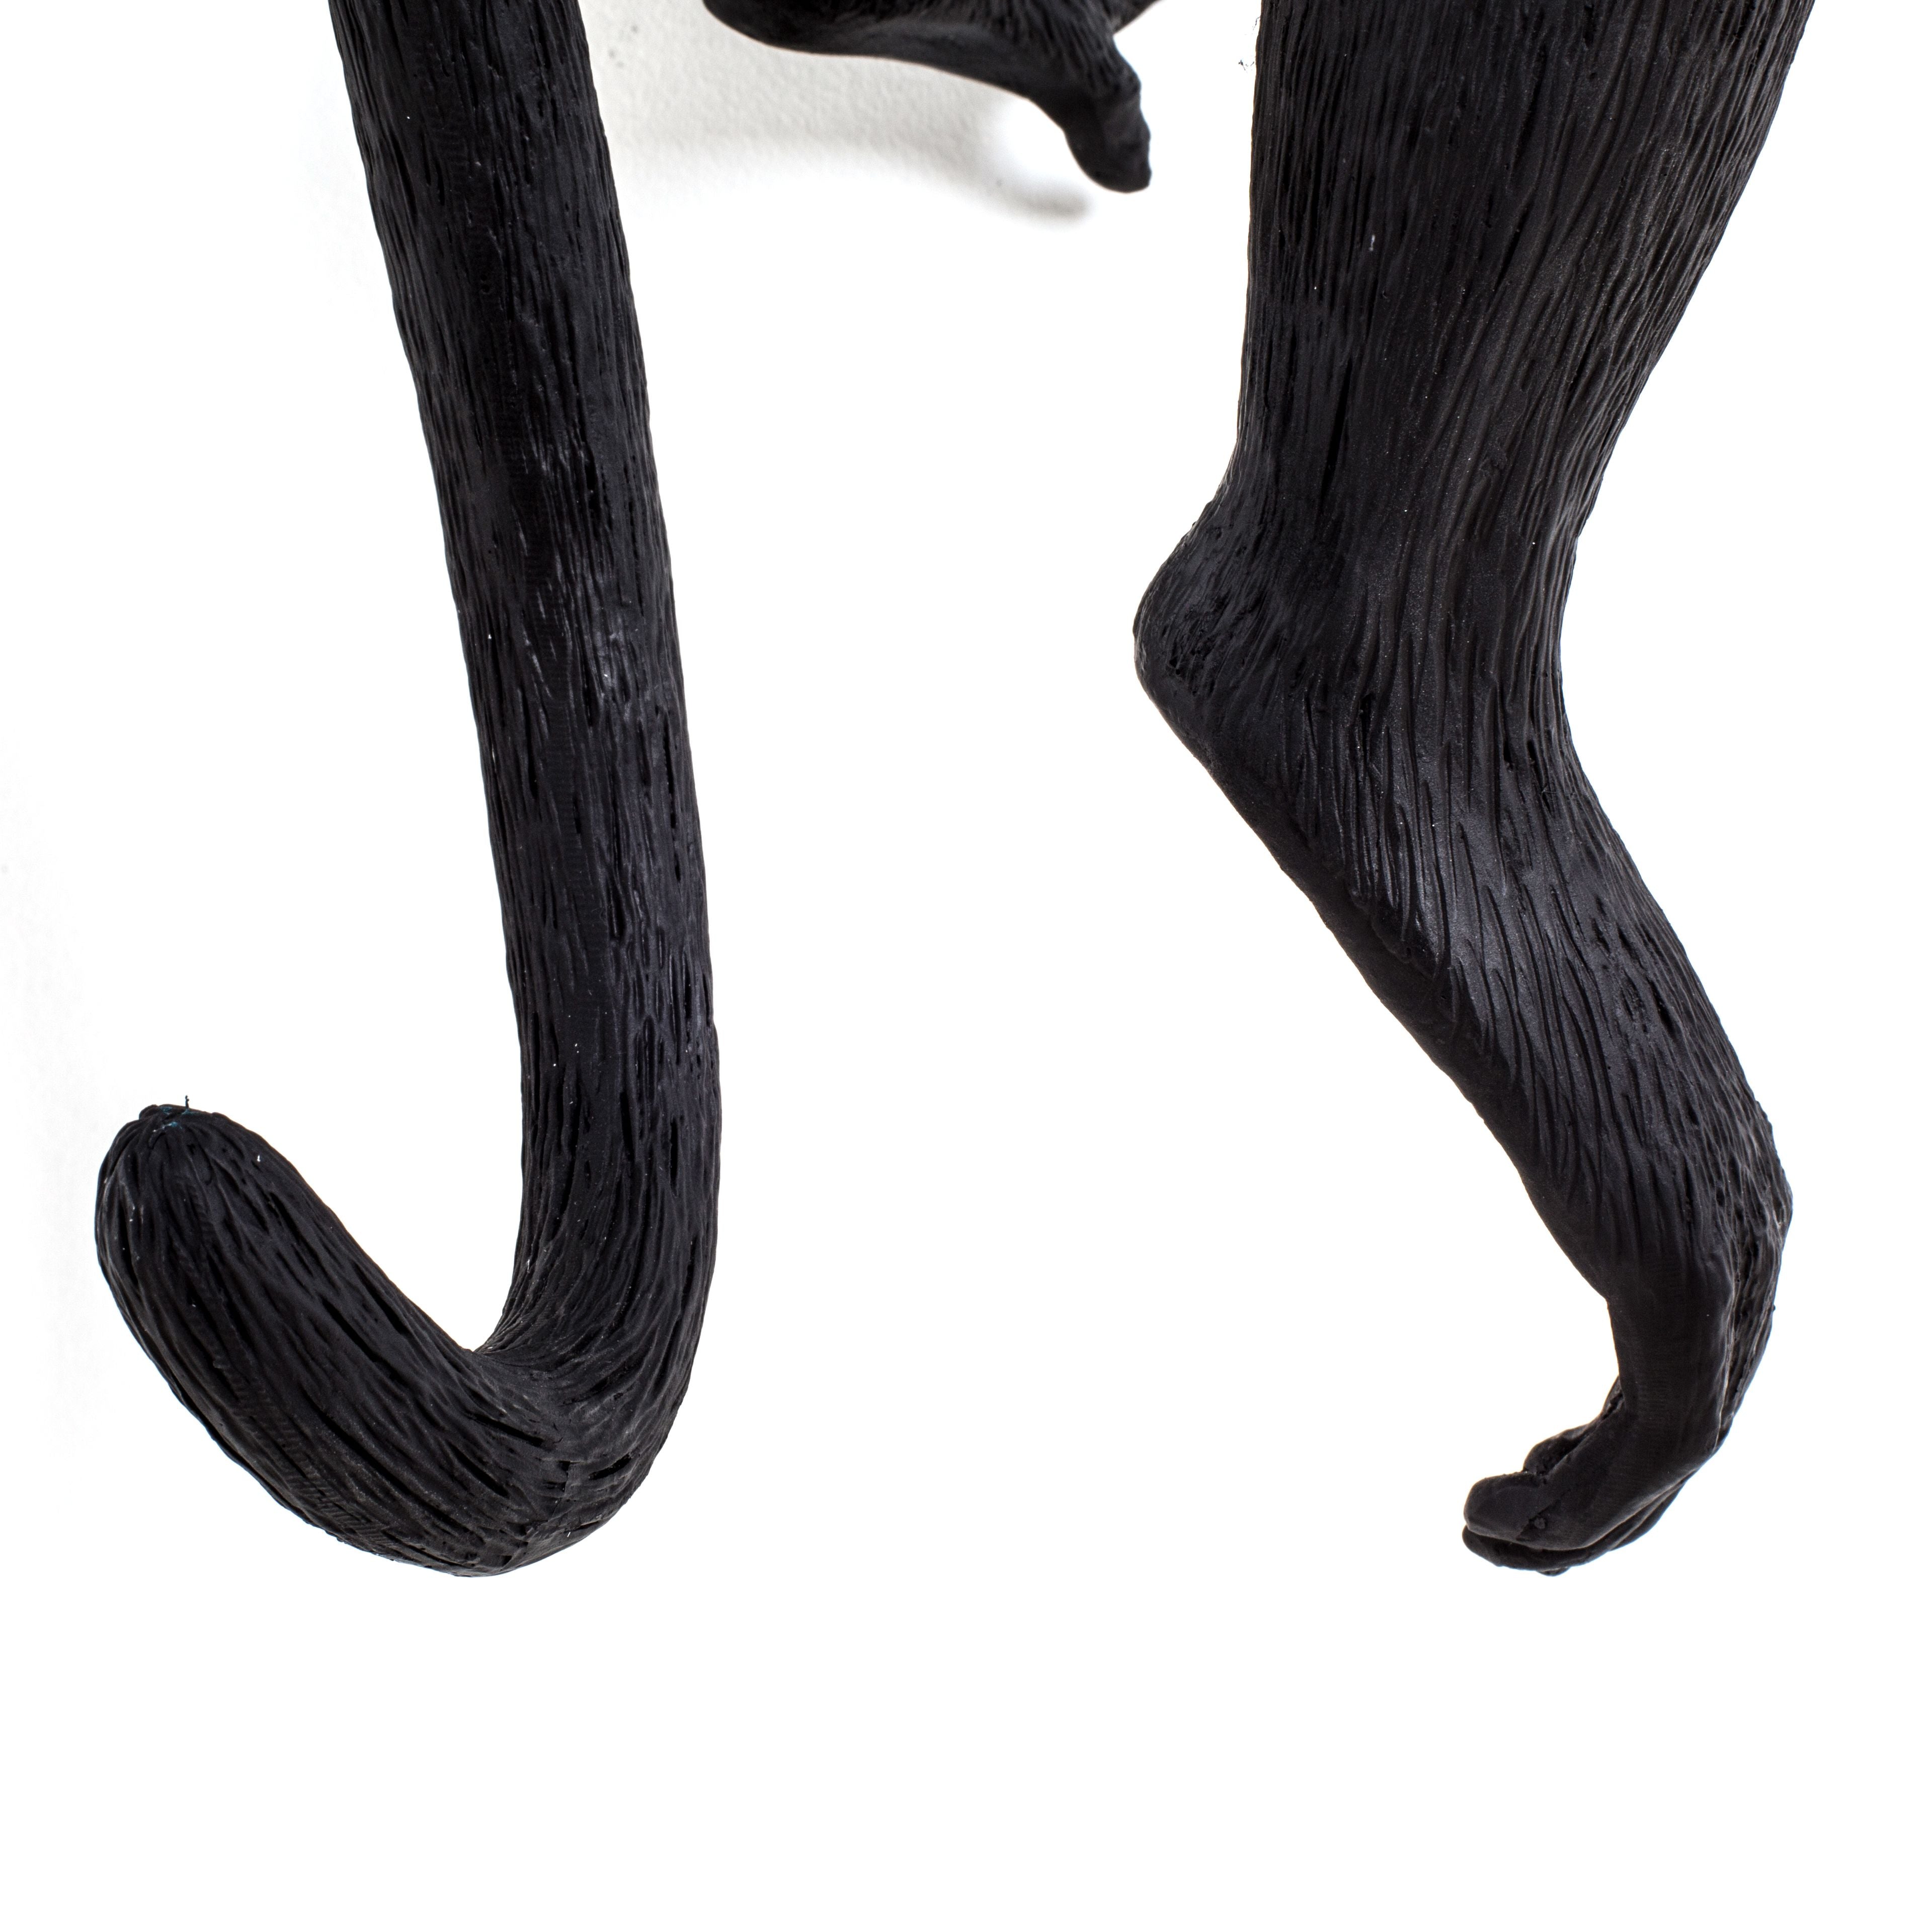 Seletti Monkey Outdoor Lamp Zwart, hangende linkerhand